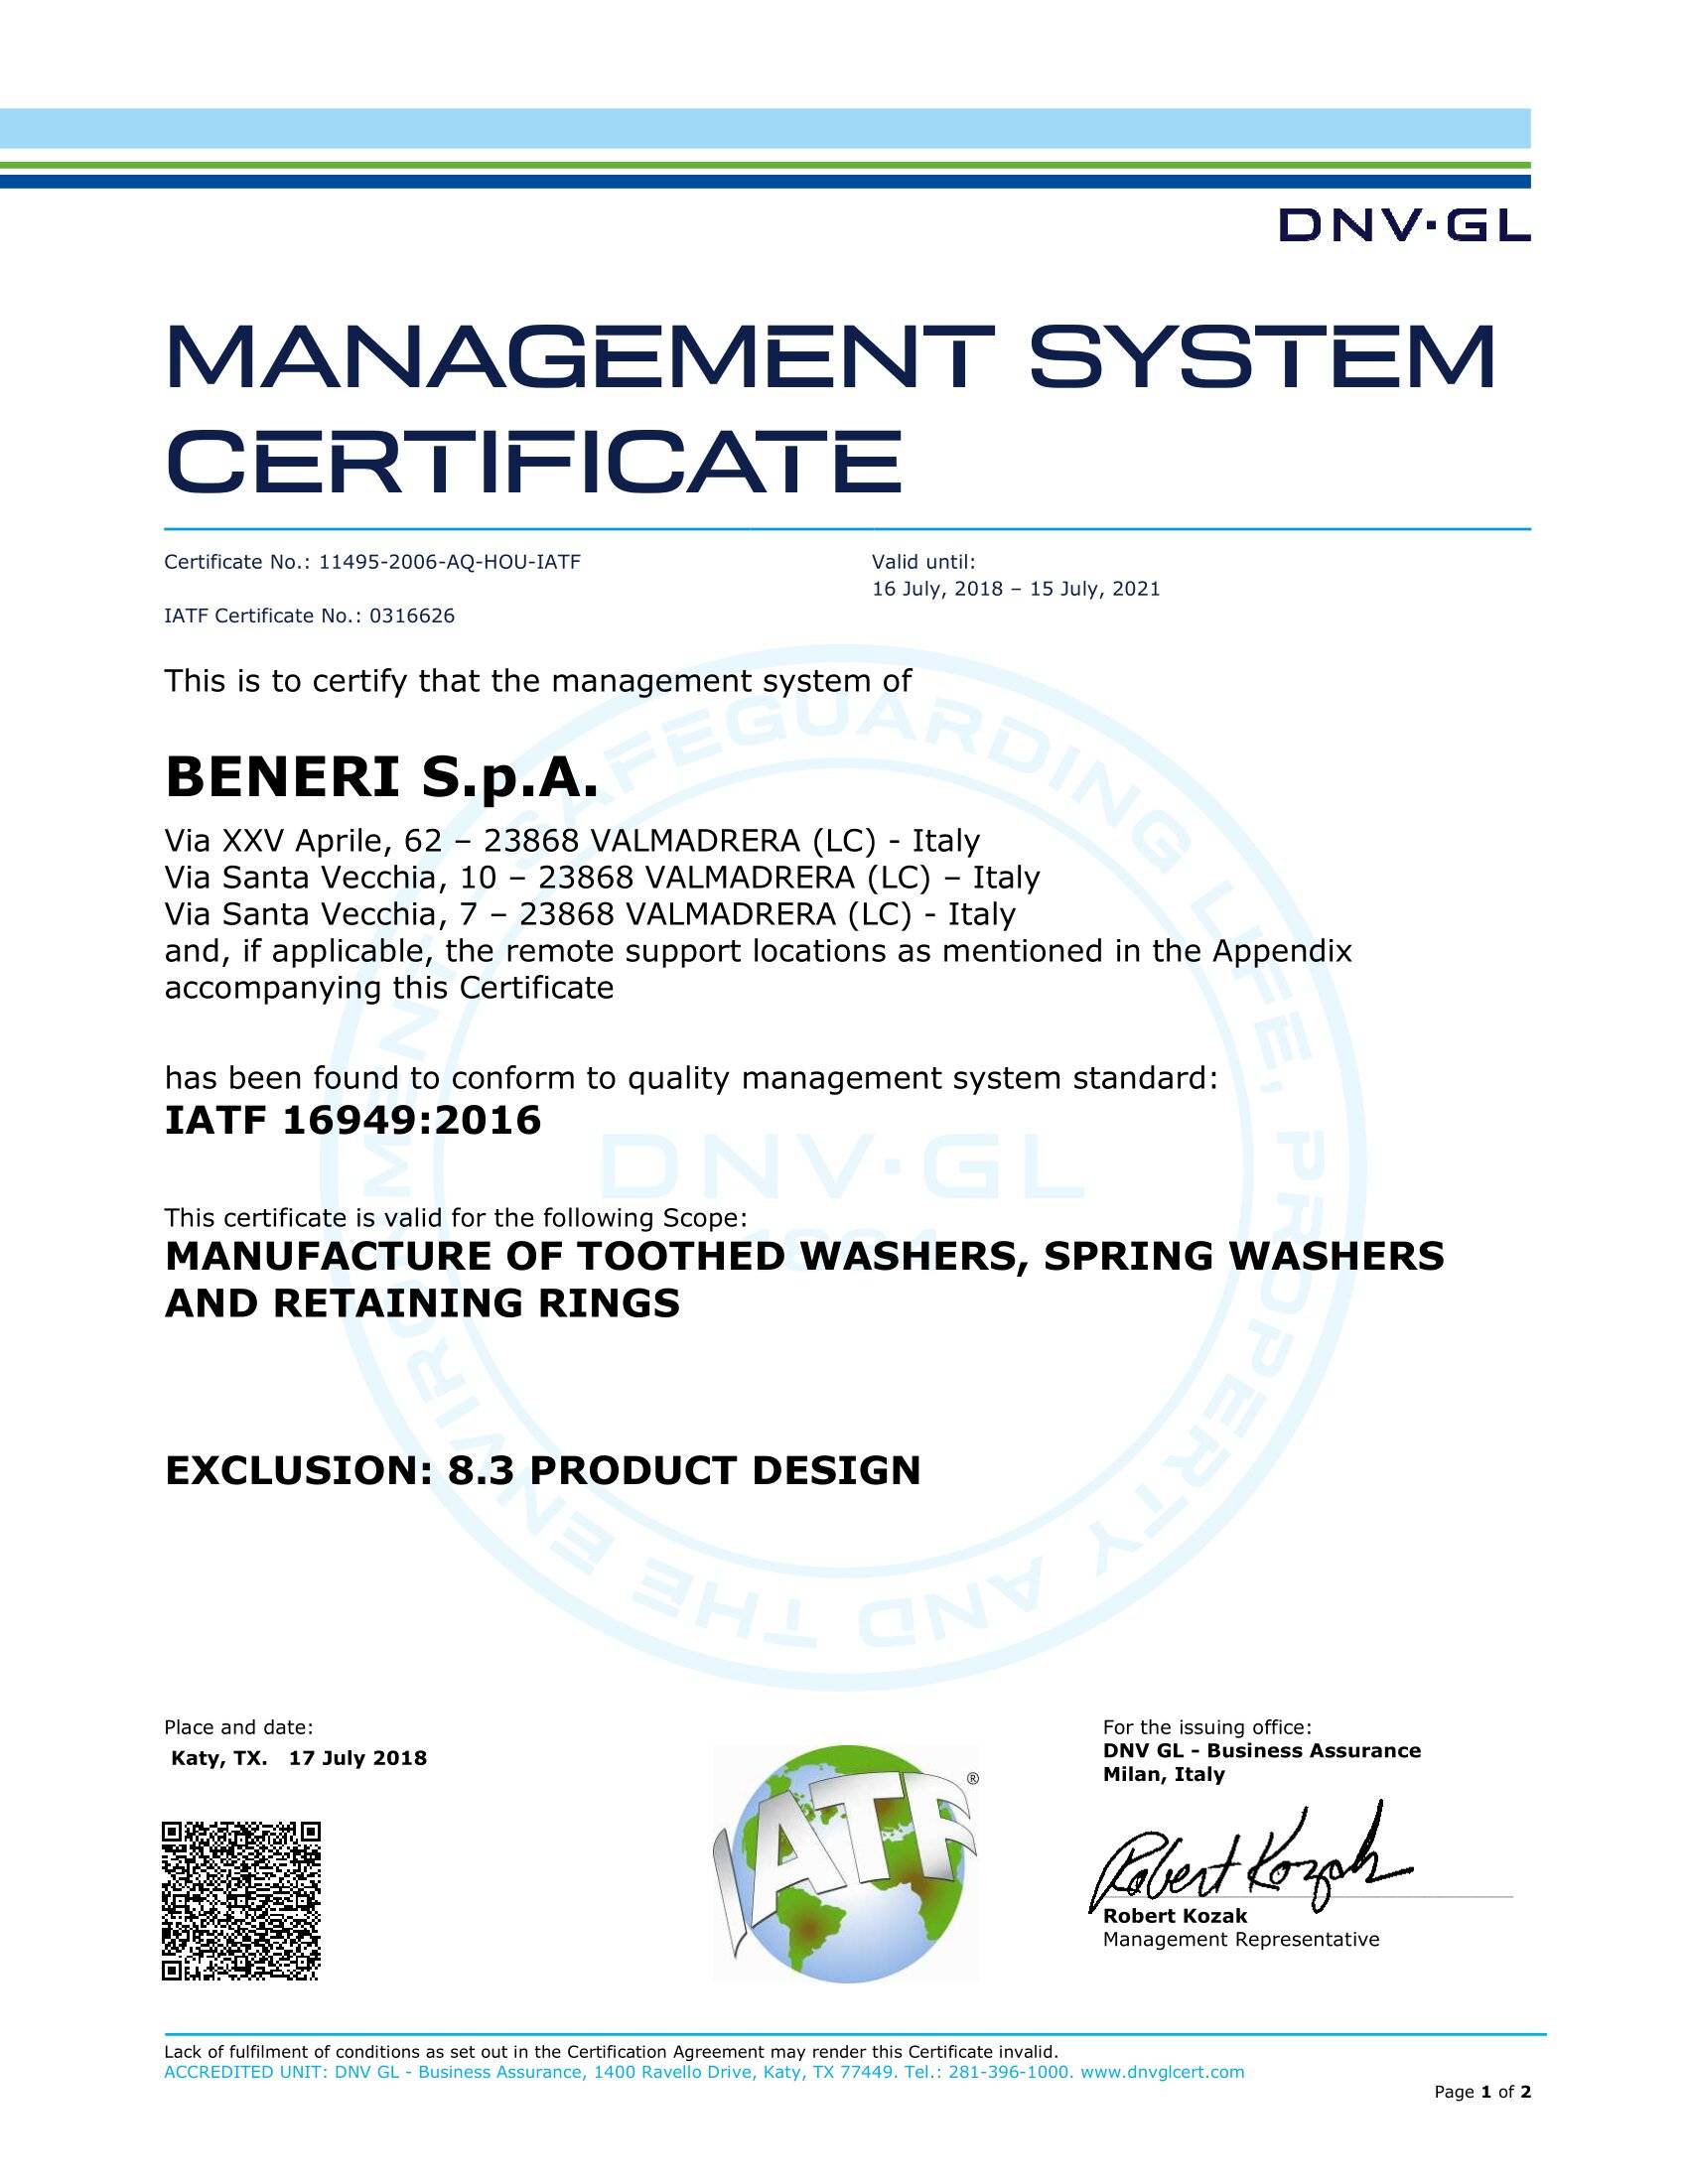 BENERI Spa obtains IATF 16949:2016 certification